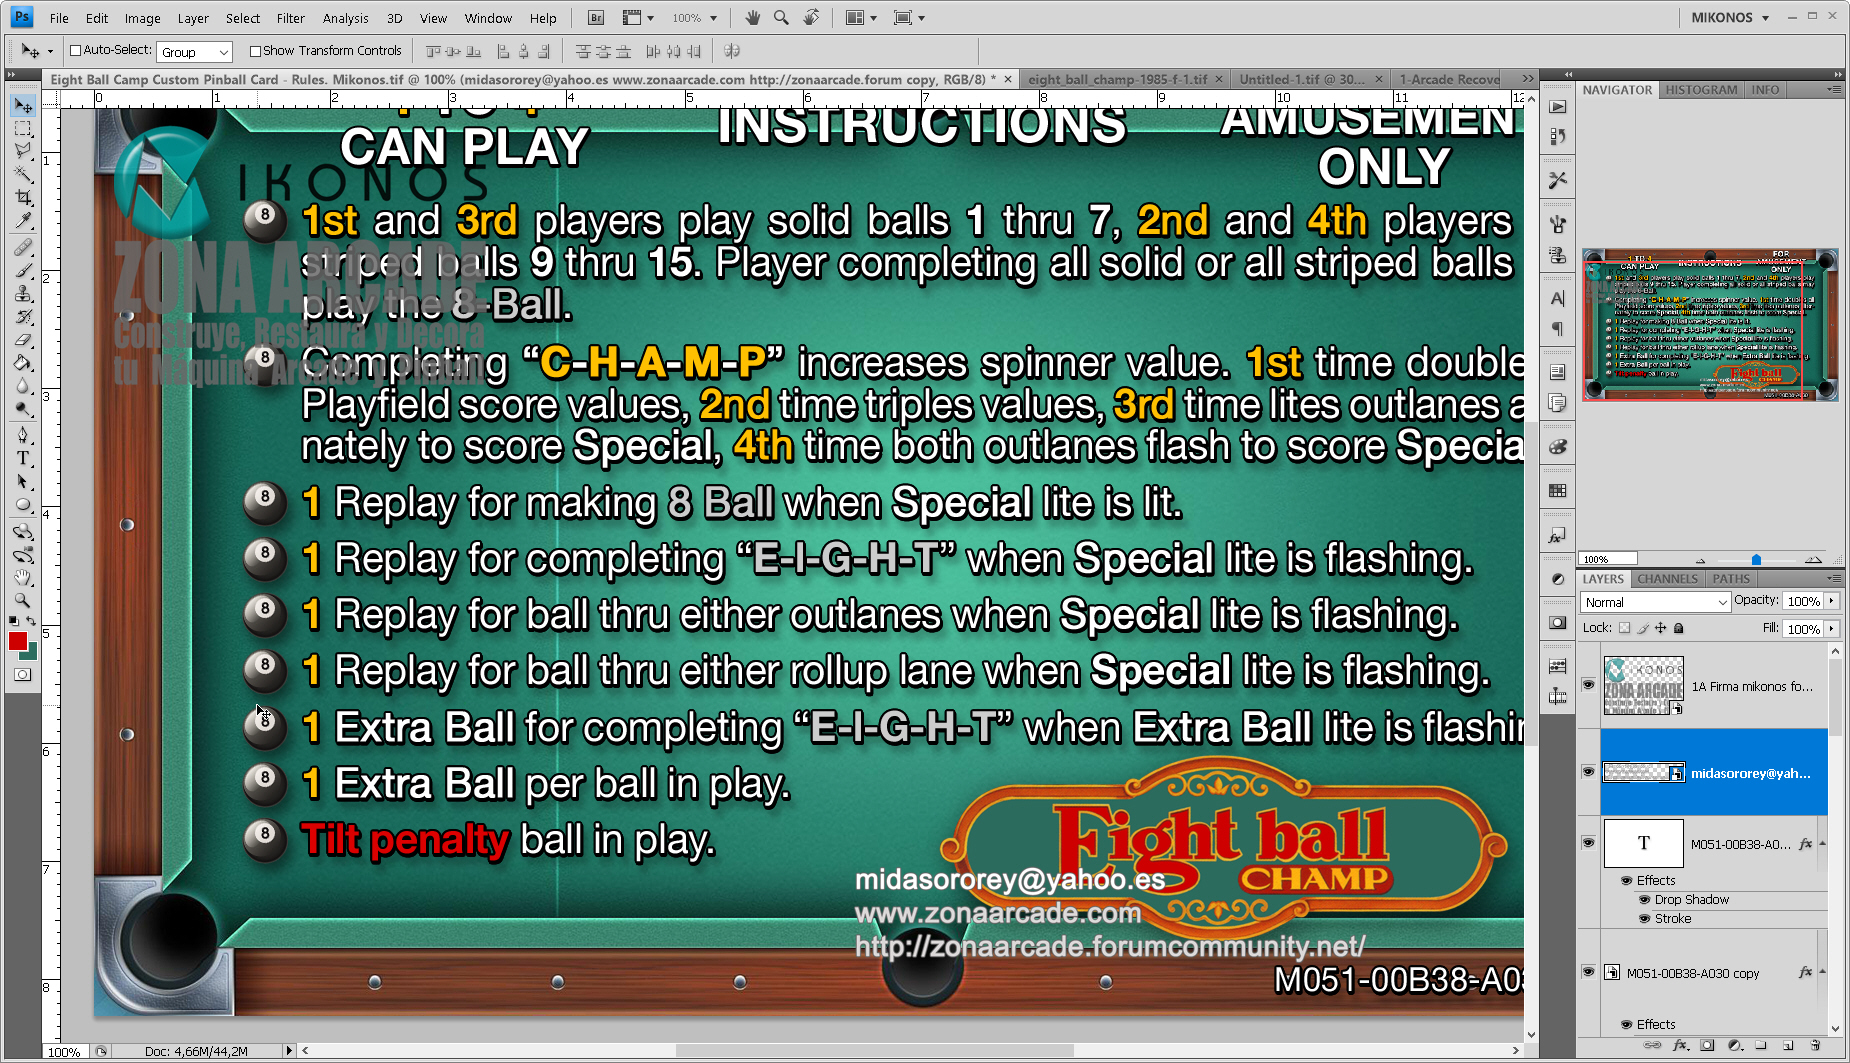 Eight Ball Champ Pinball Card Customized - Rules. Mikonos2